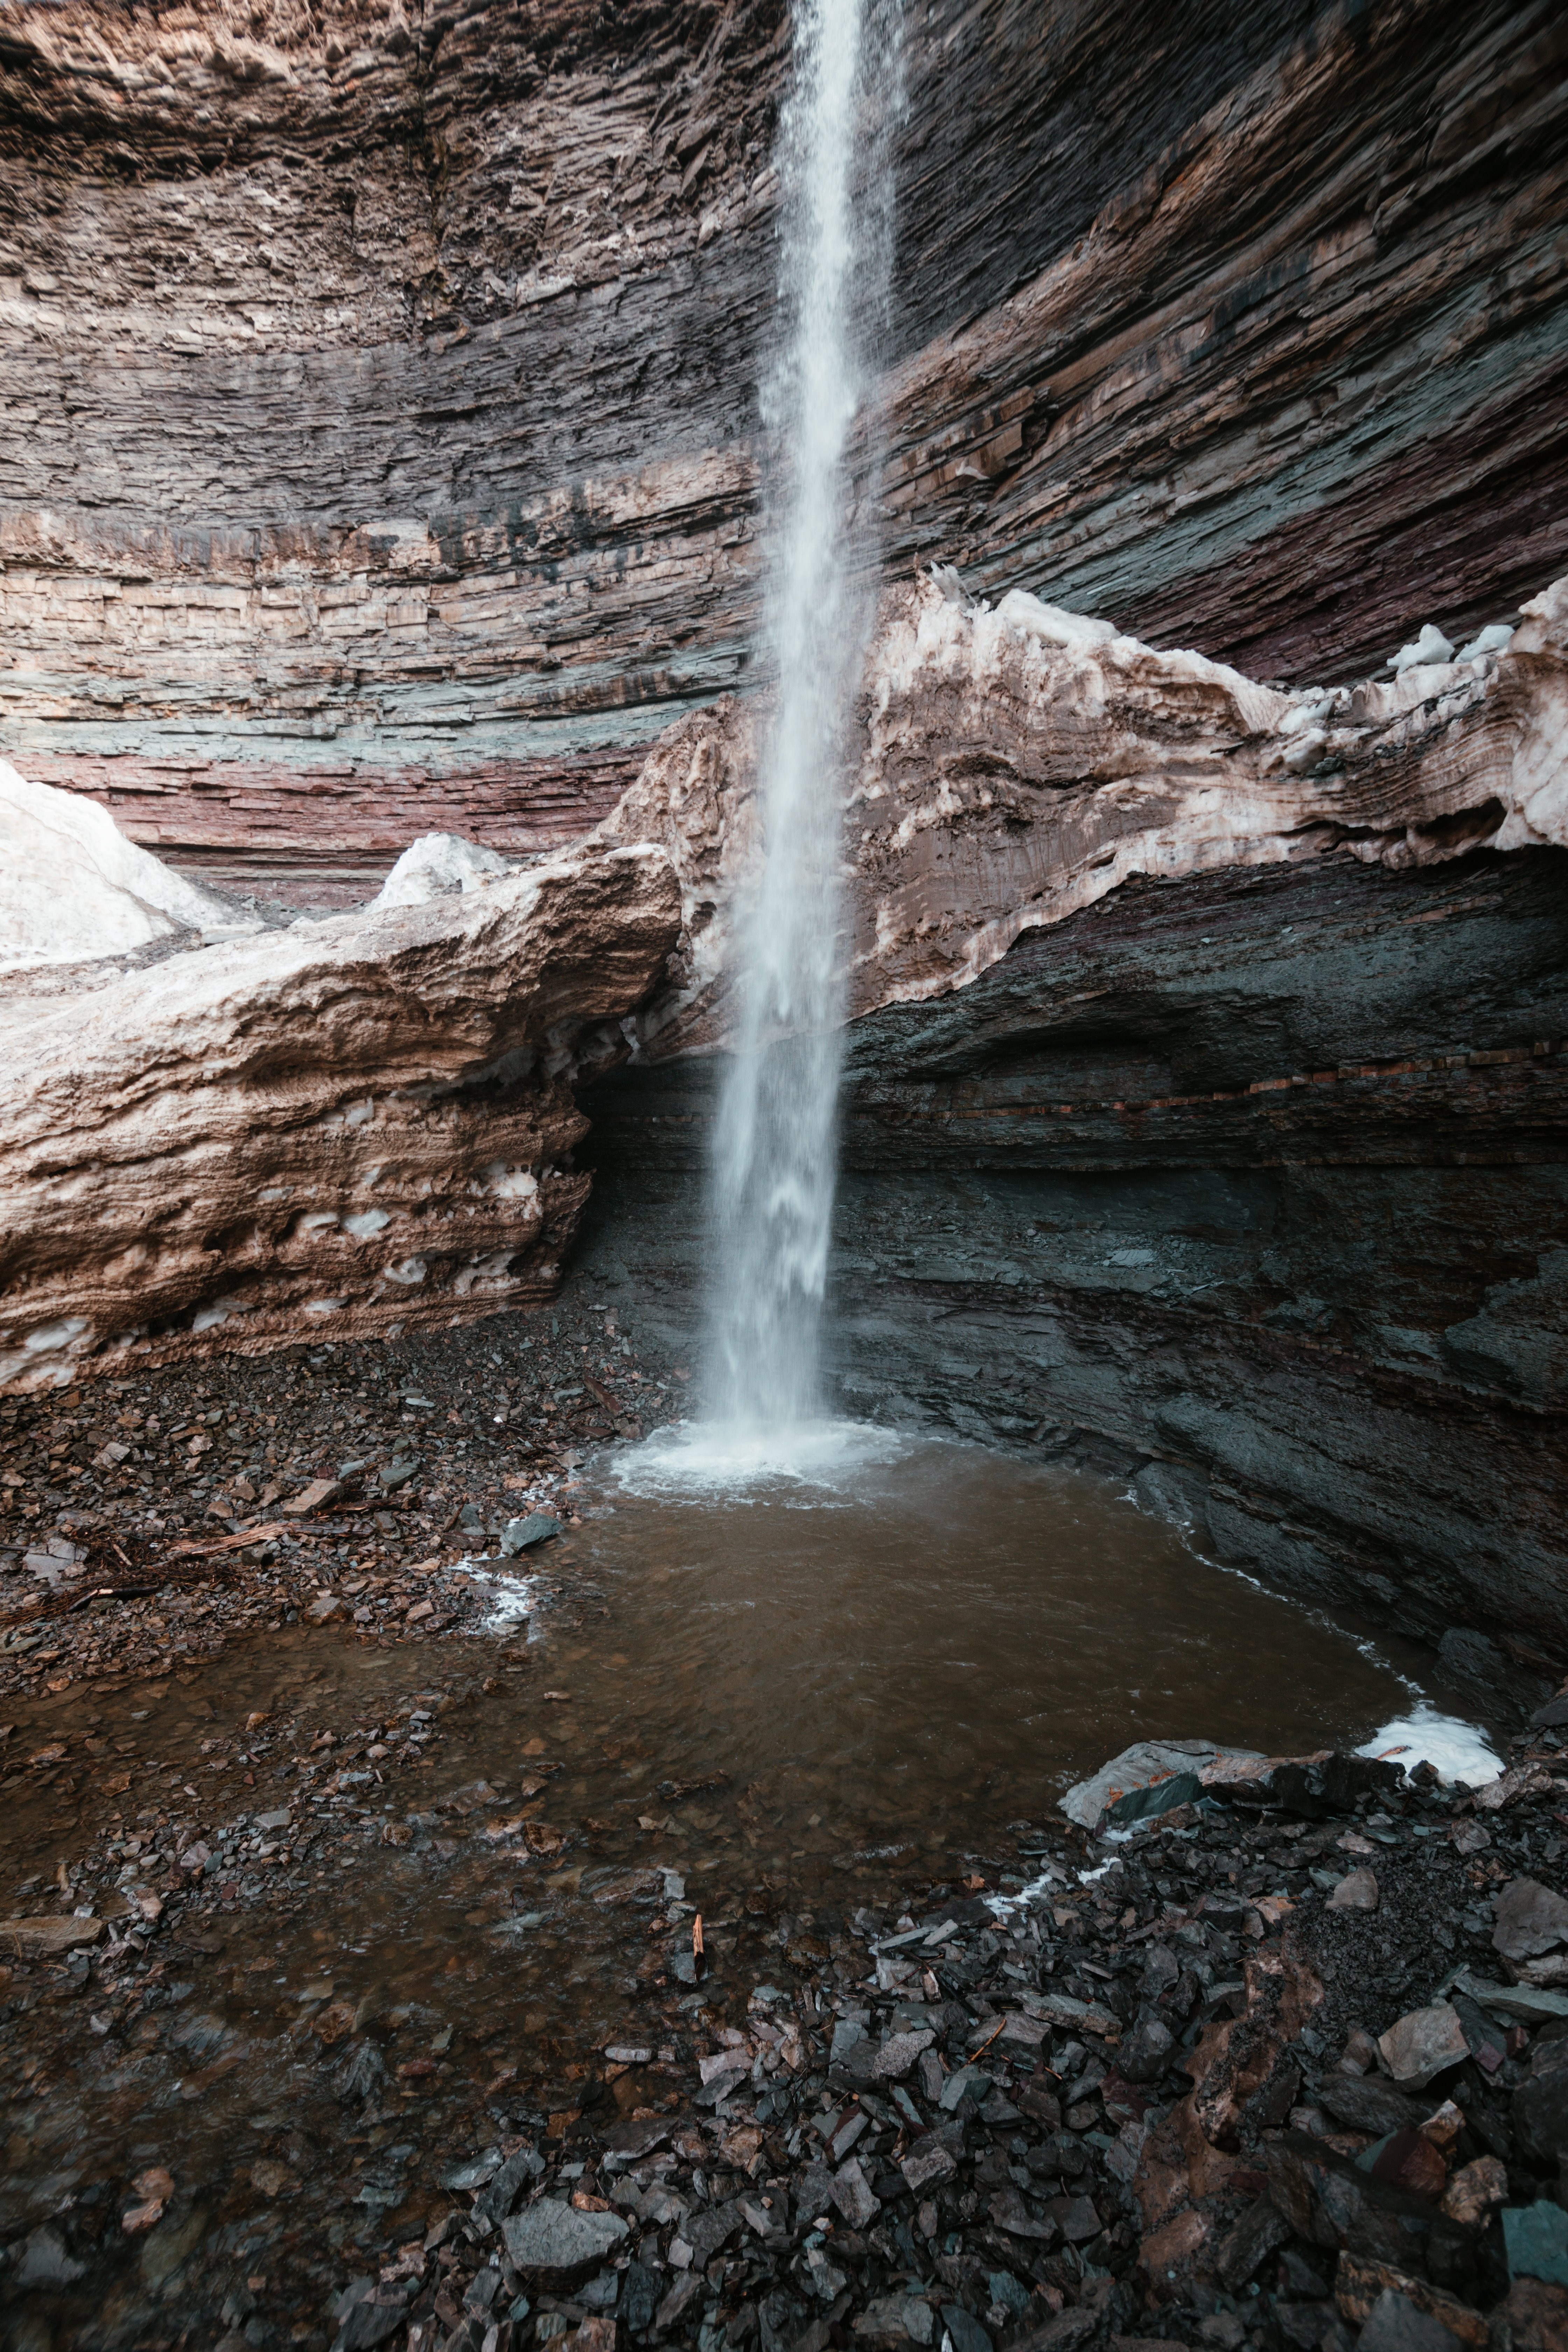 Foto de una cascada en una caverna rocosa 